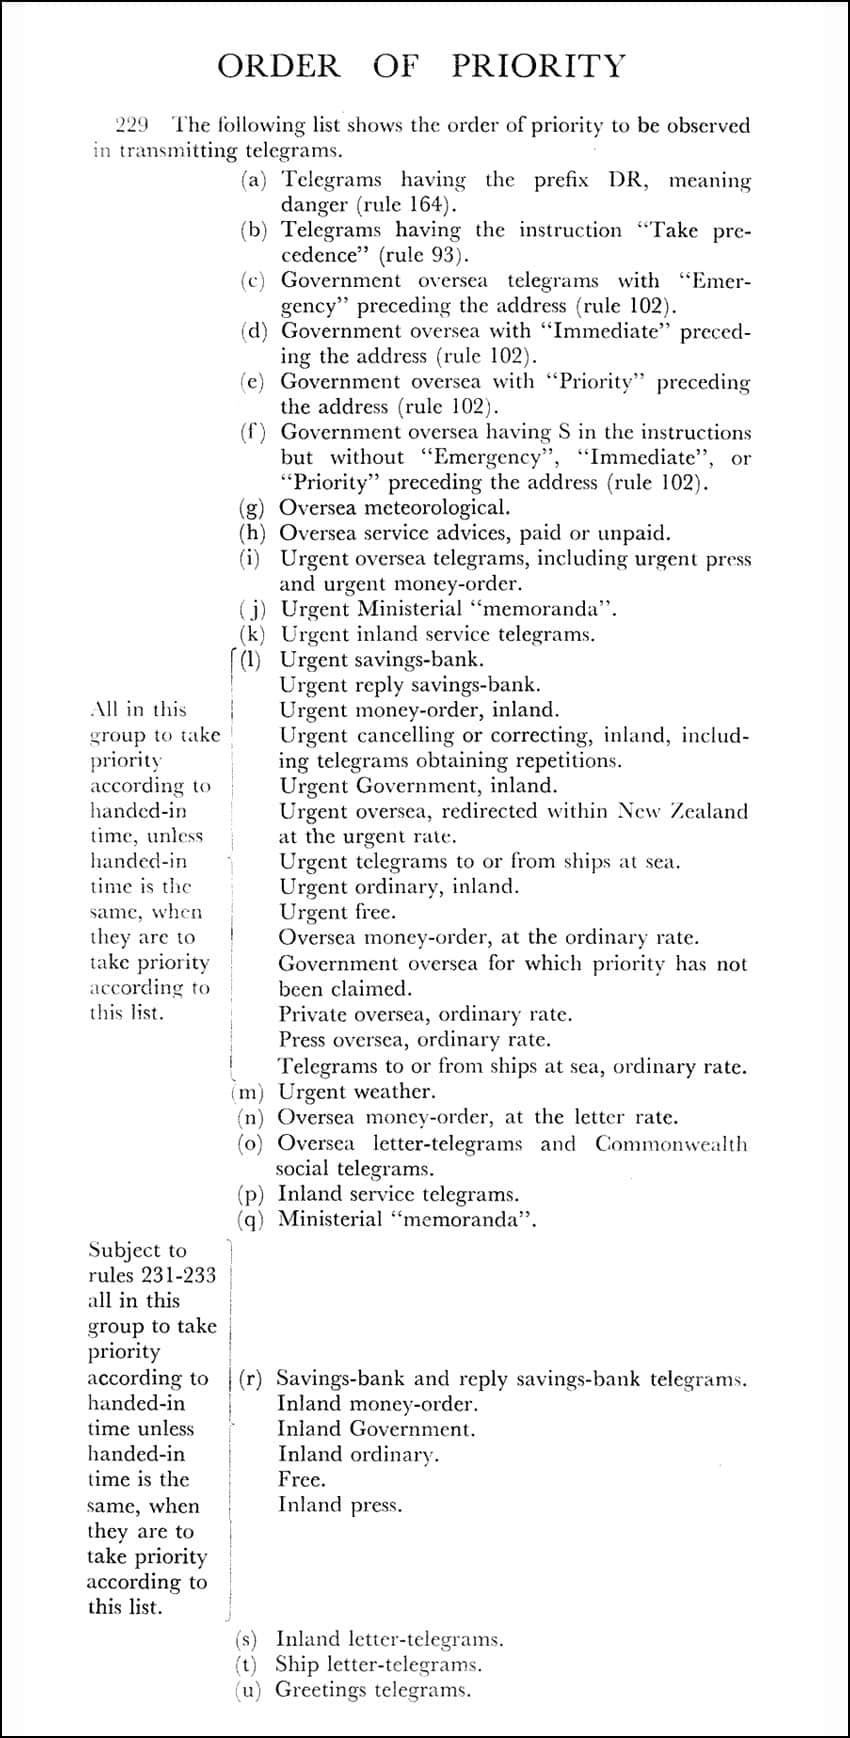 List of telegram priorities from 1957